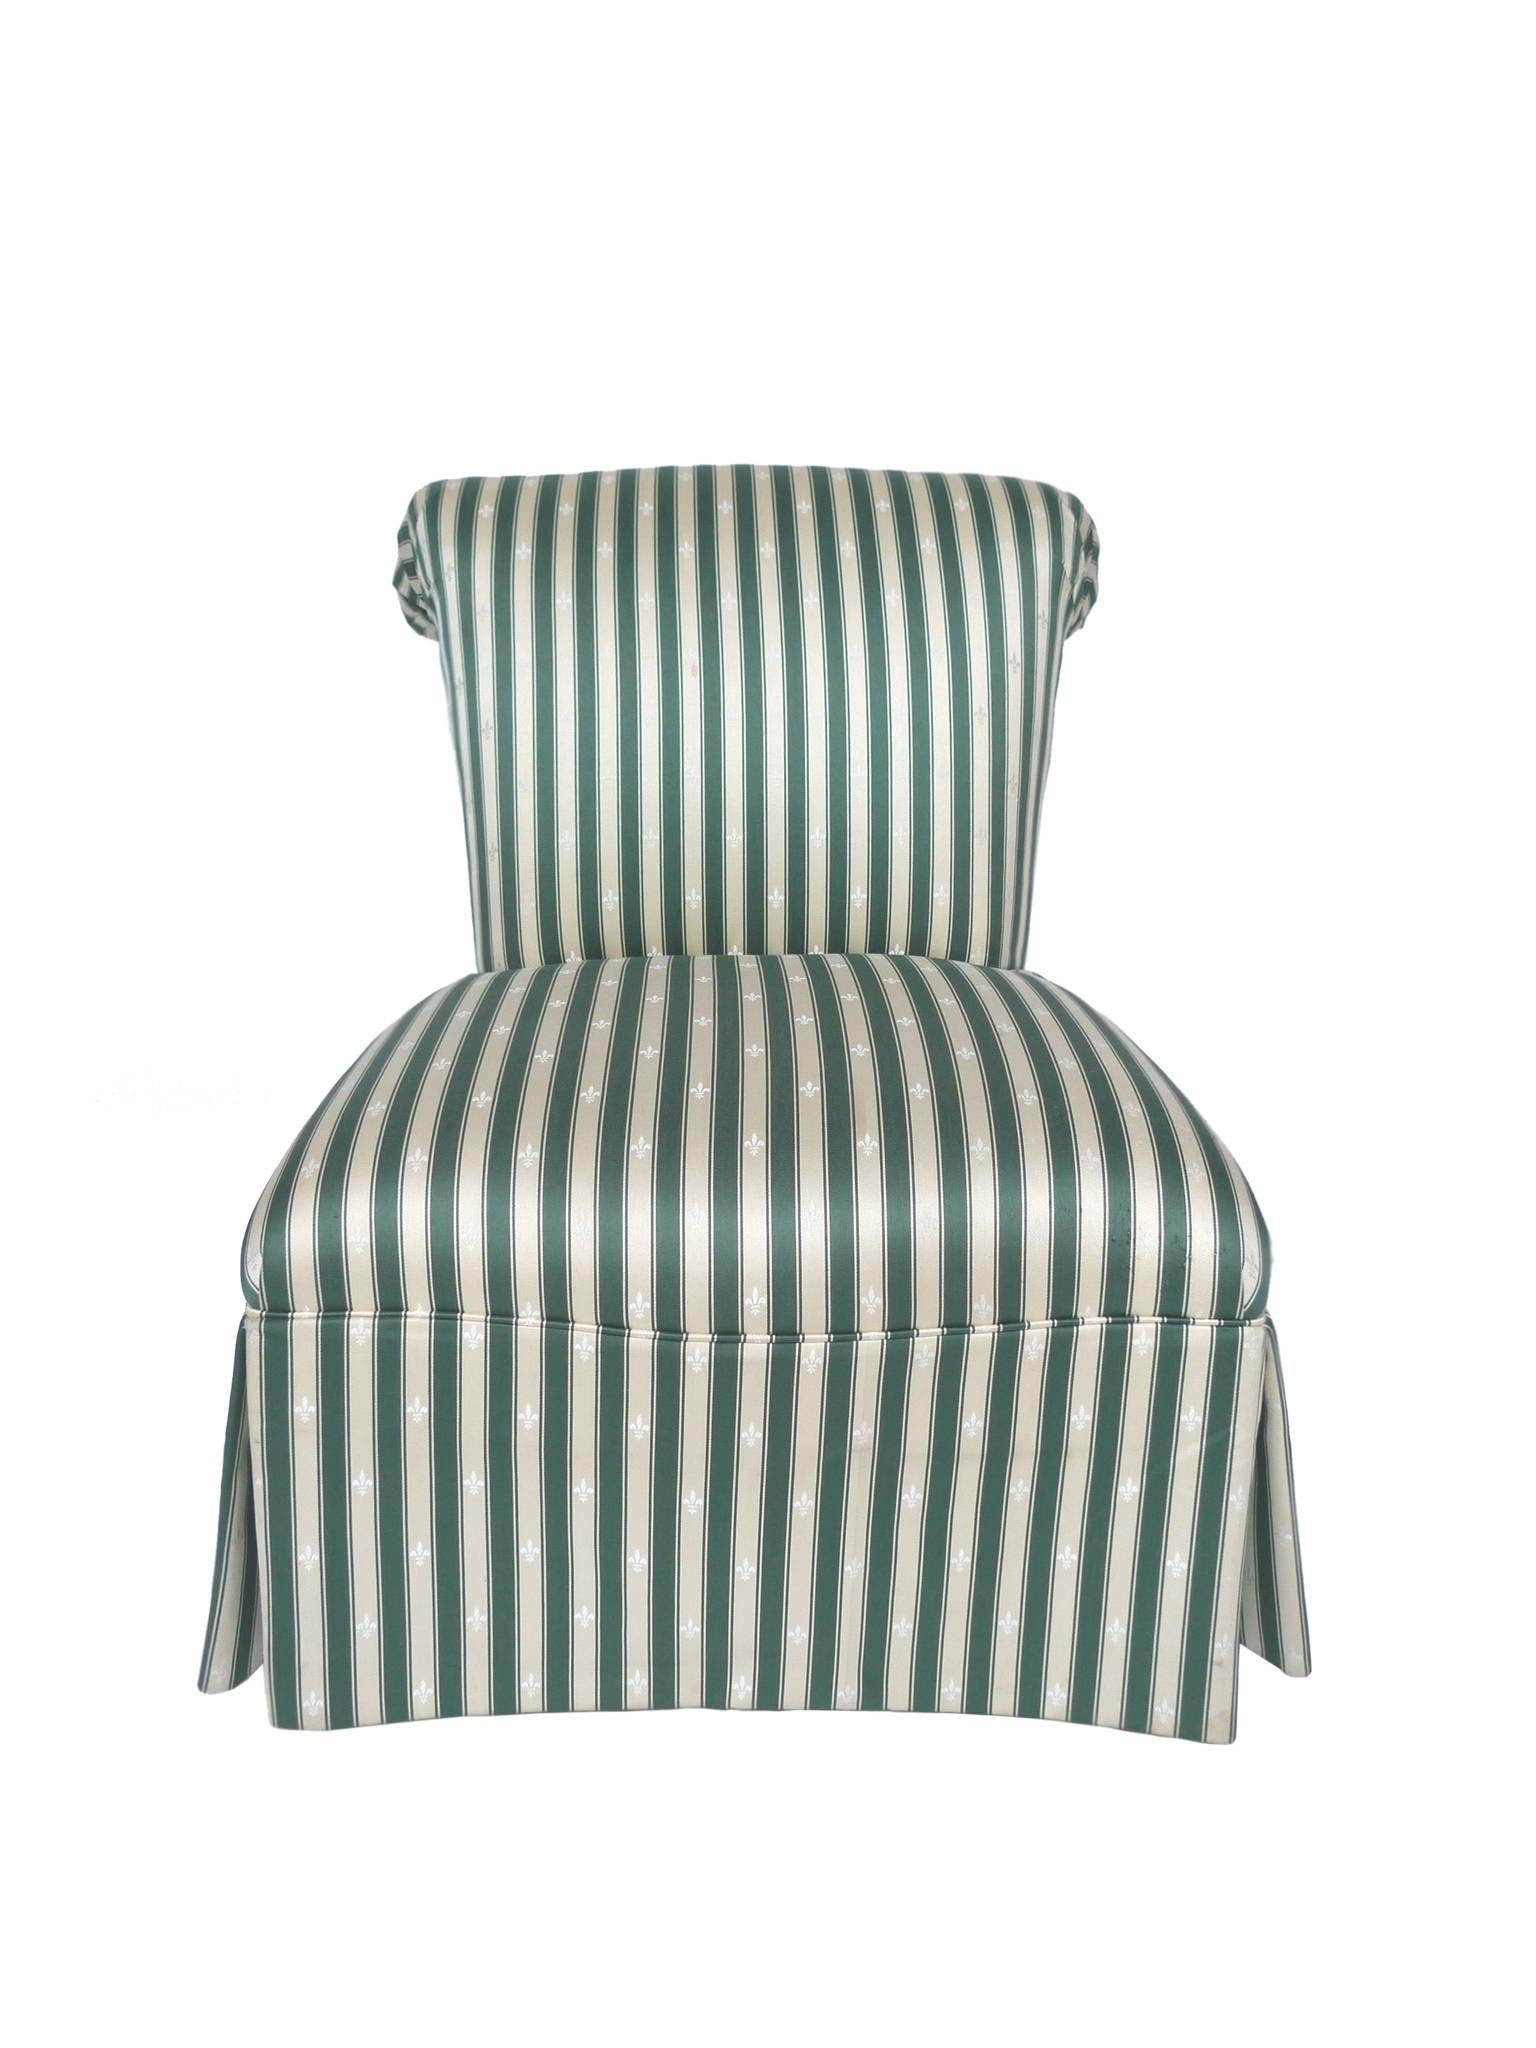 striped slipper chair